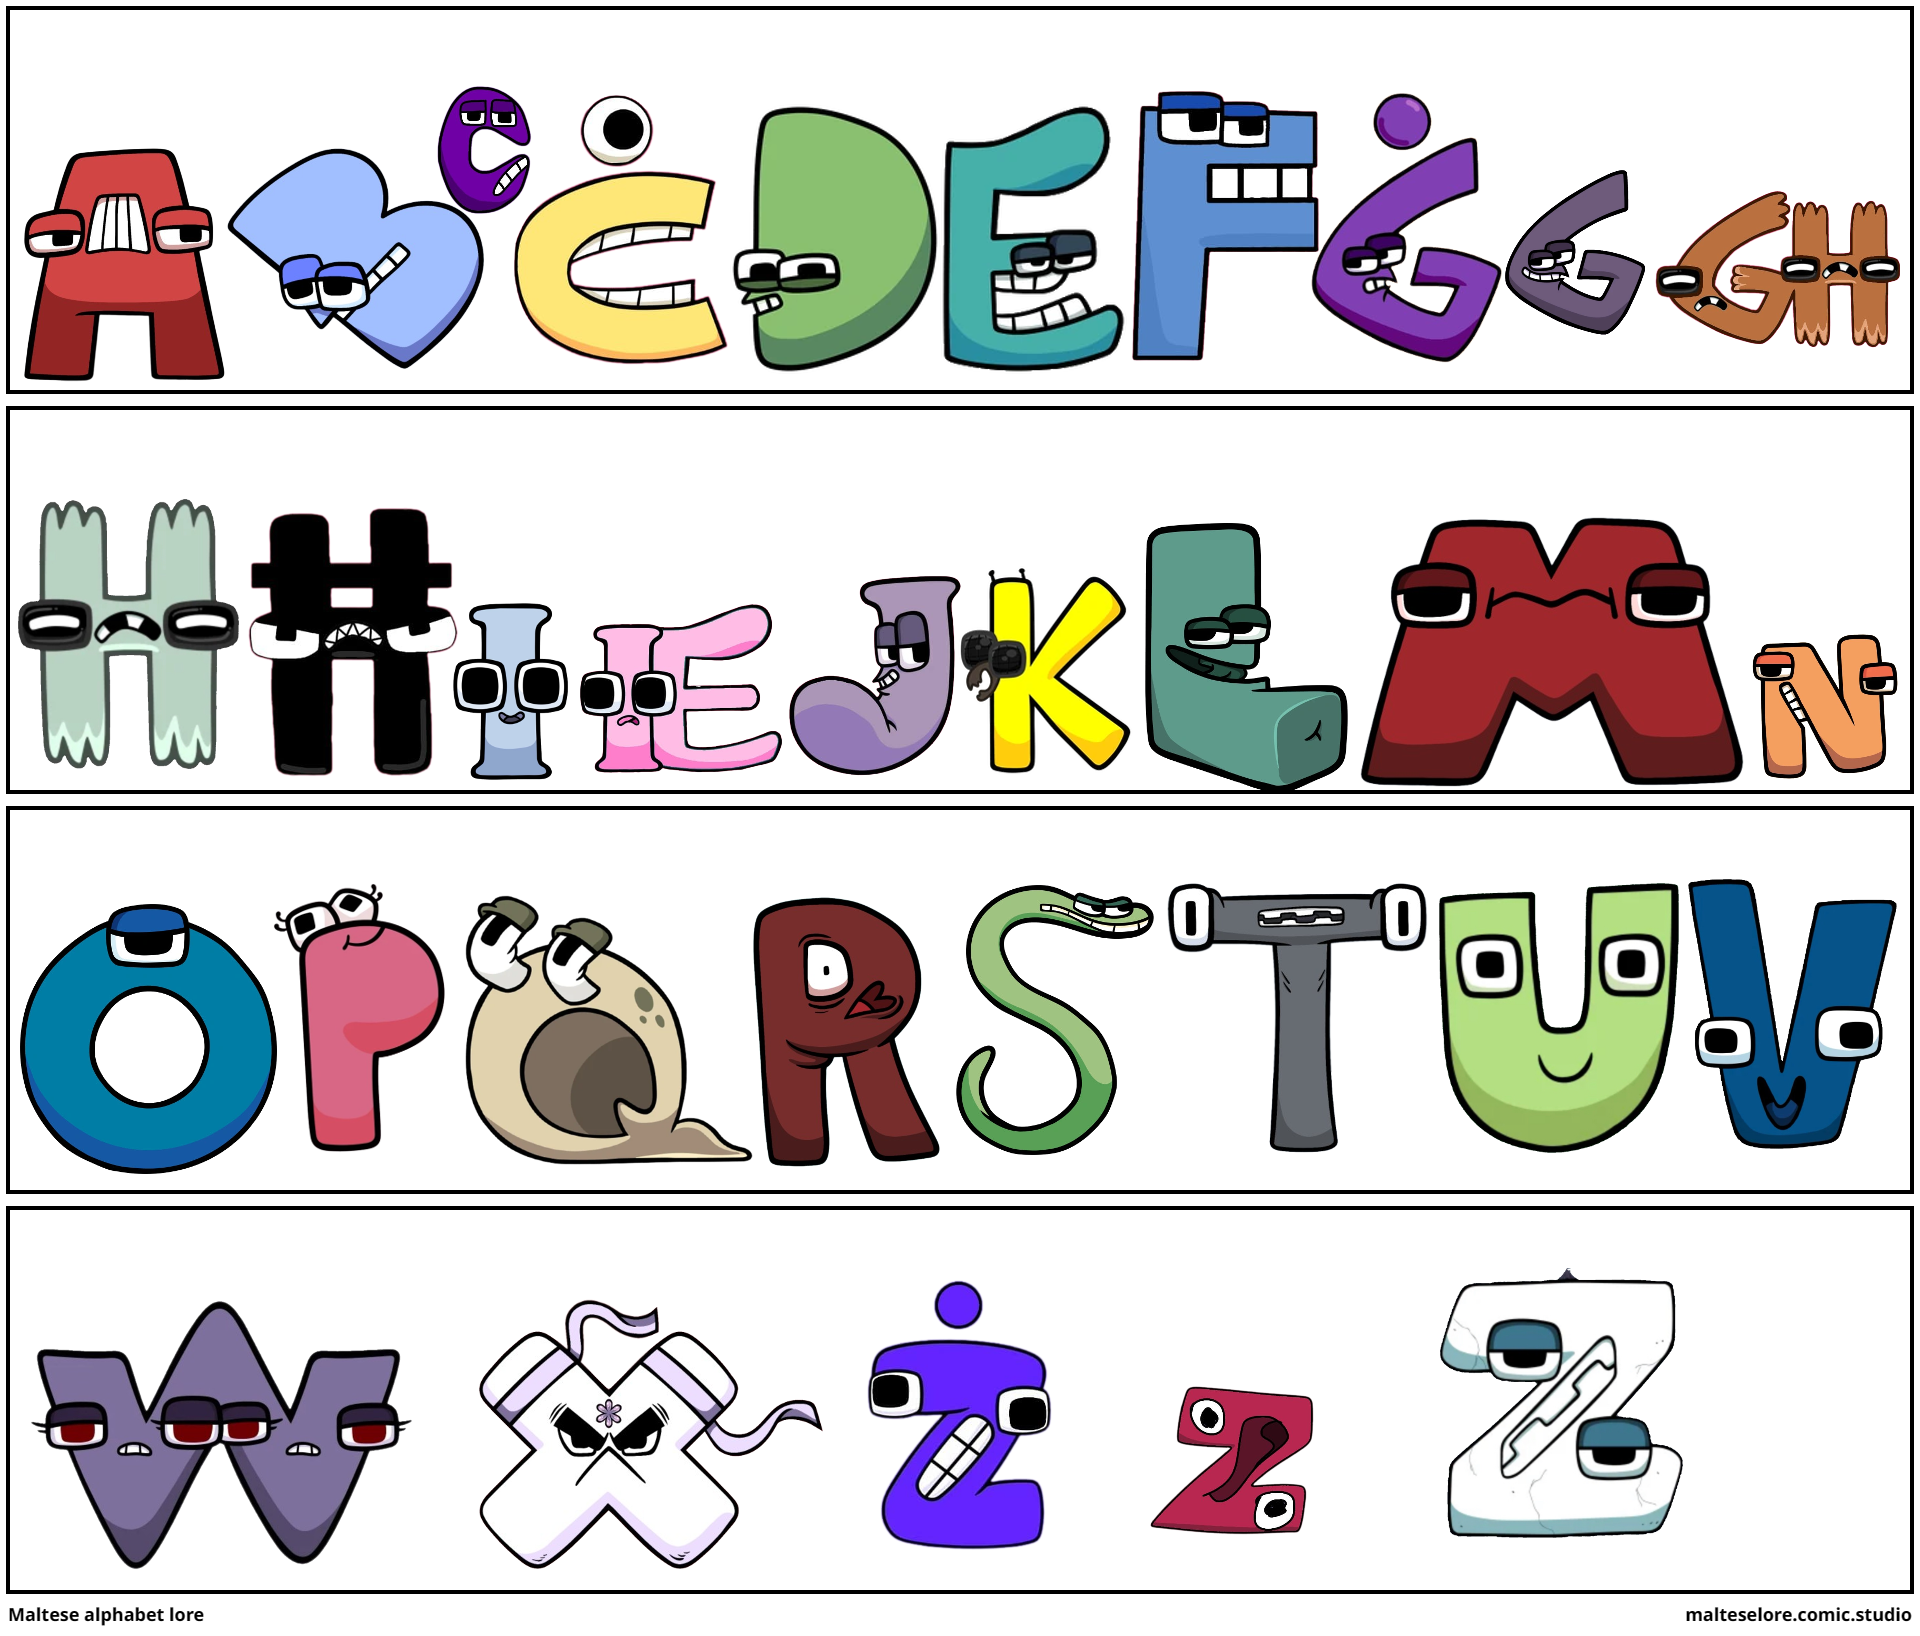 Maltese alphabet lore - Comic Studio